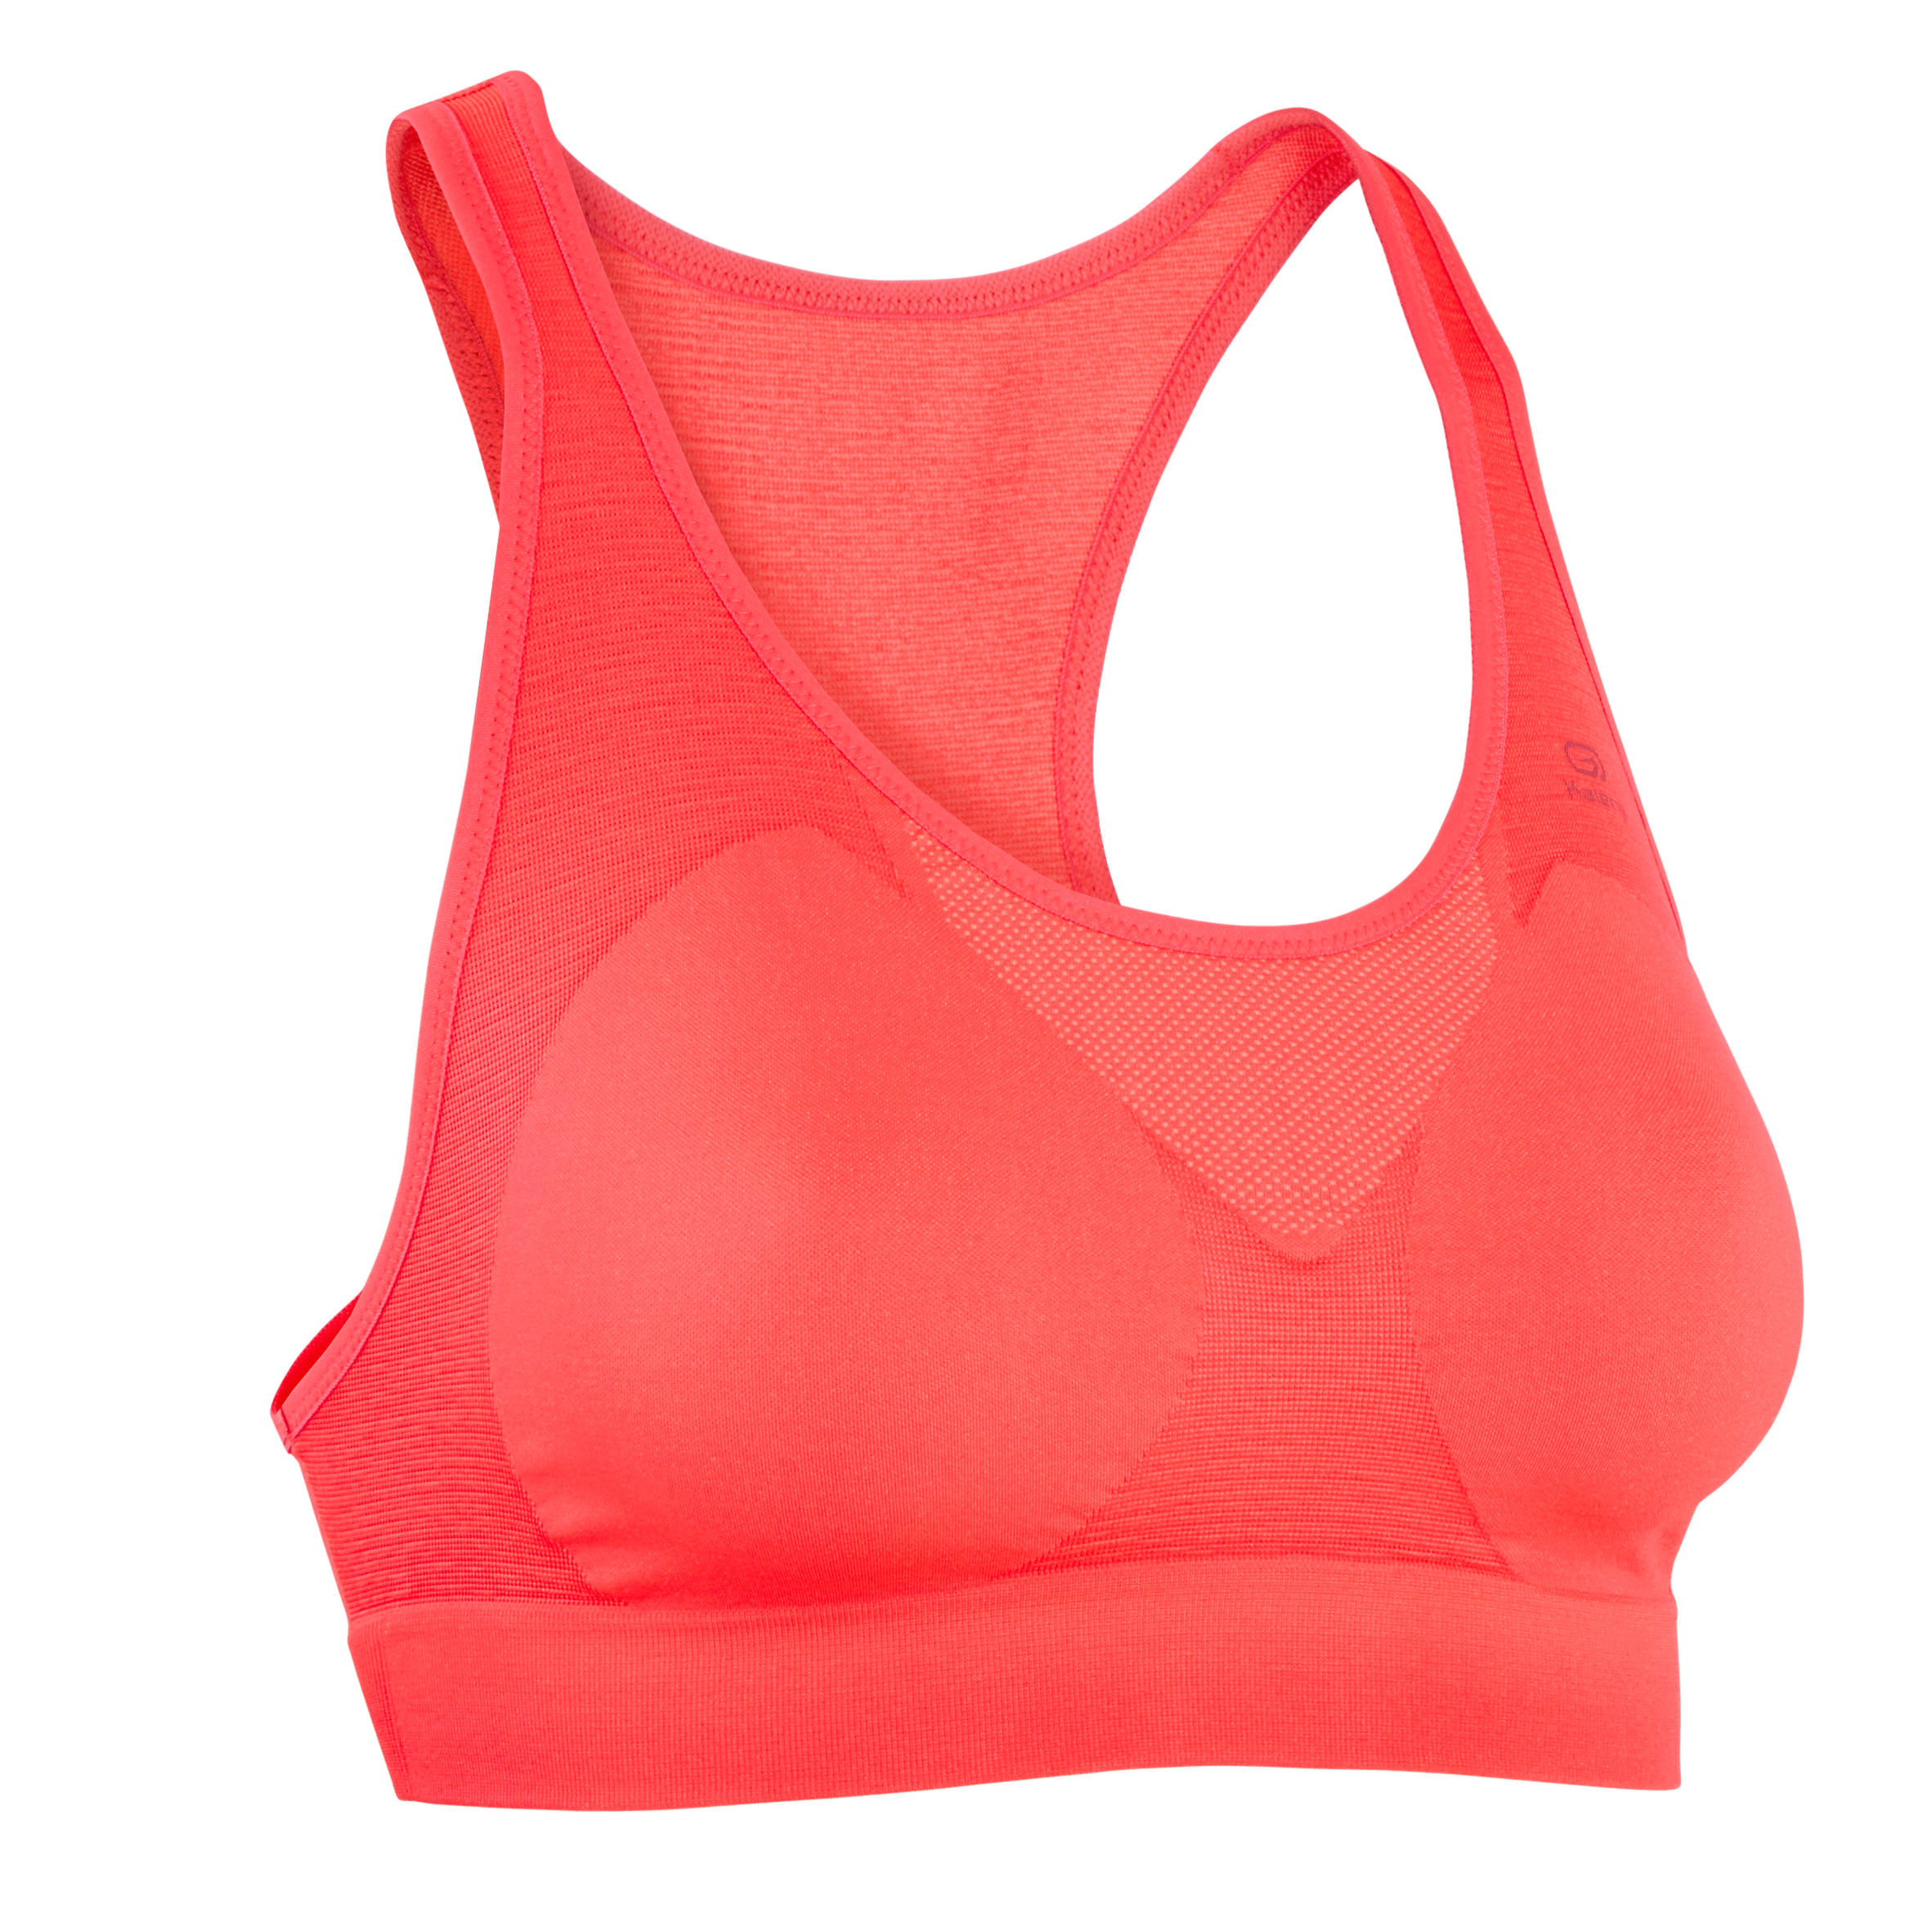 Buy Basic Running Bra Neon Coral Pink Online